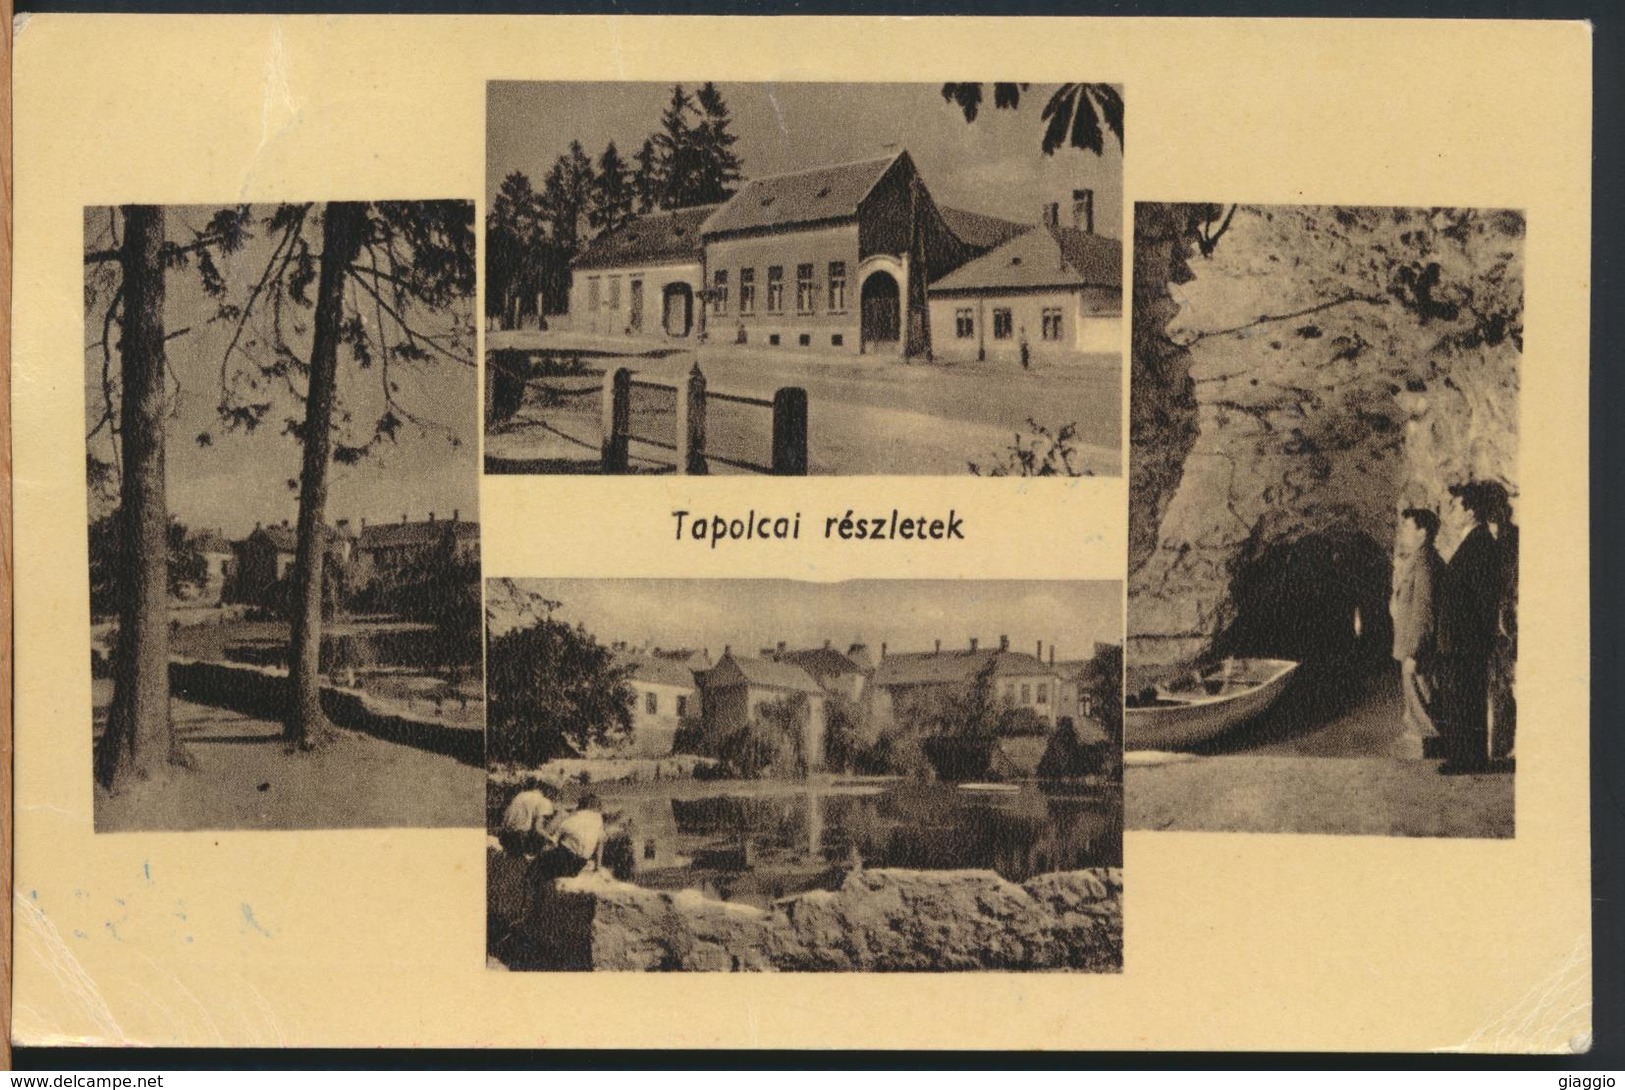 °°° 13231 - HUNGARY - TAPOLCAI RESZLETEK - 1957 With Stamps °°° - Ungheria